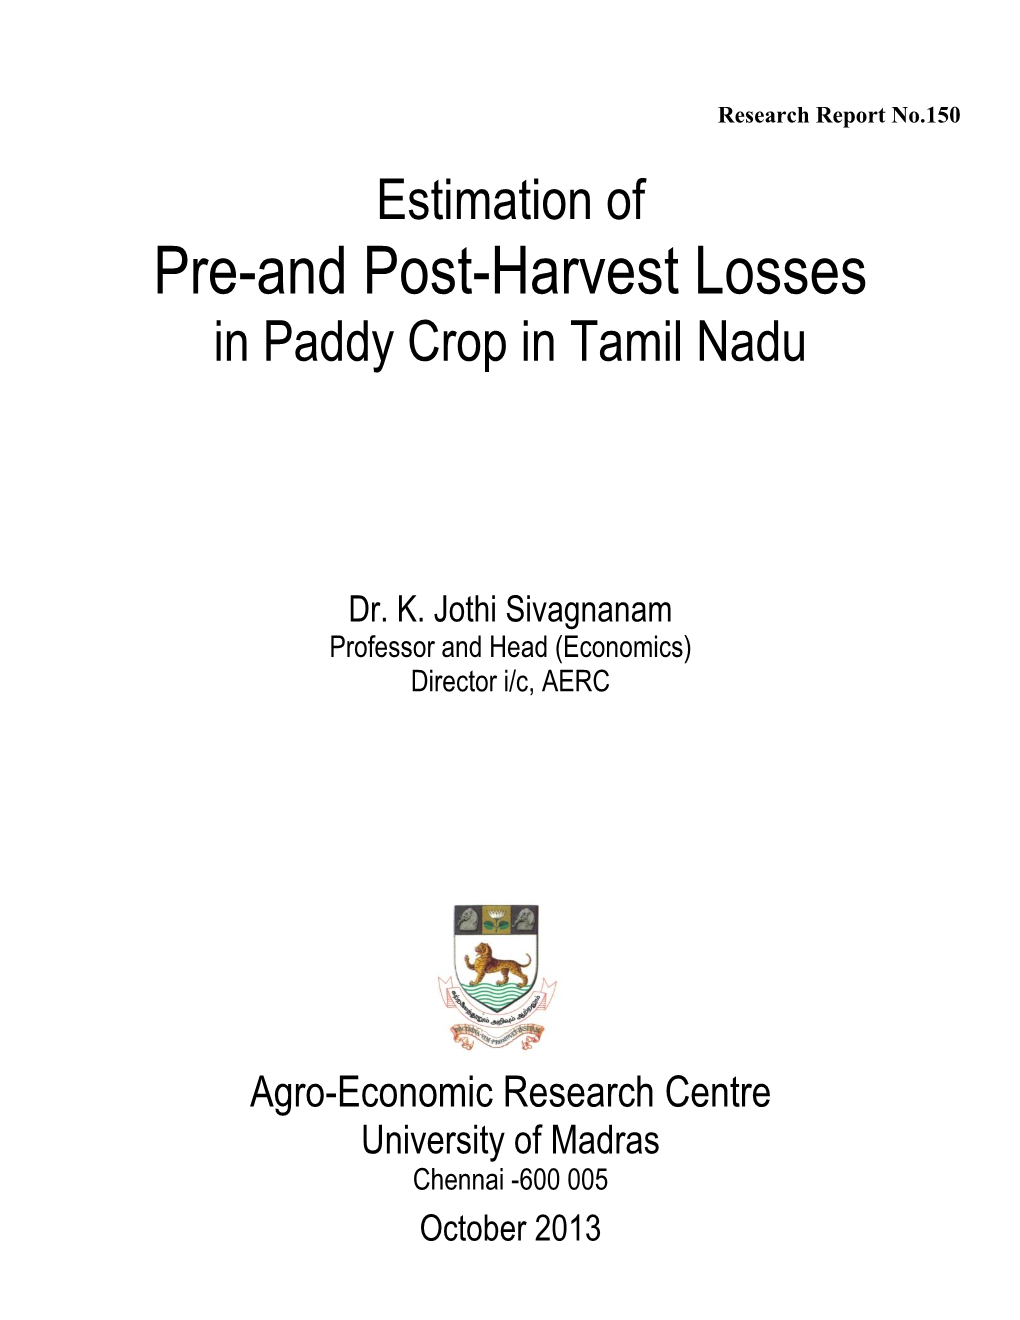 Pre-And Post-Harvest Losses in Paddy Crop in Tamil Nadu